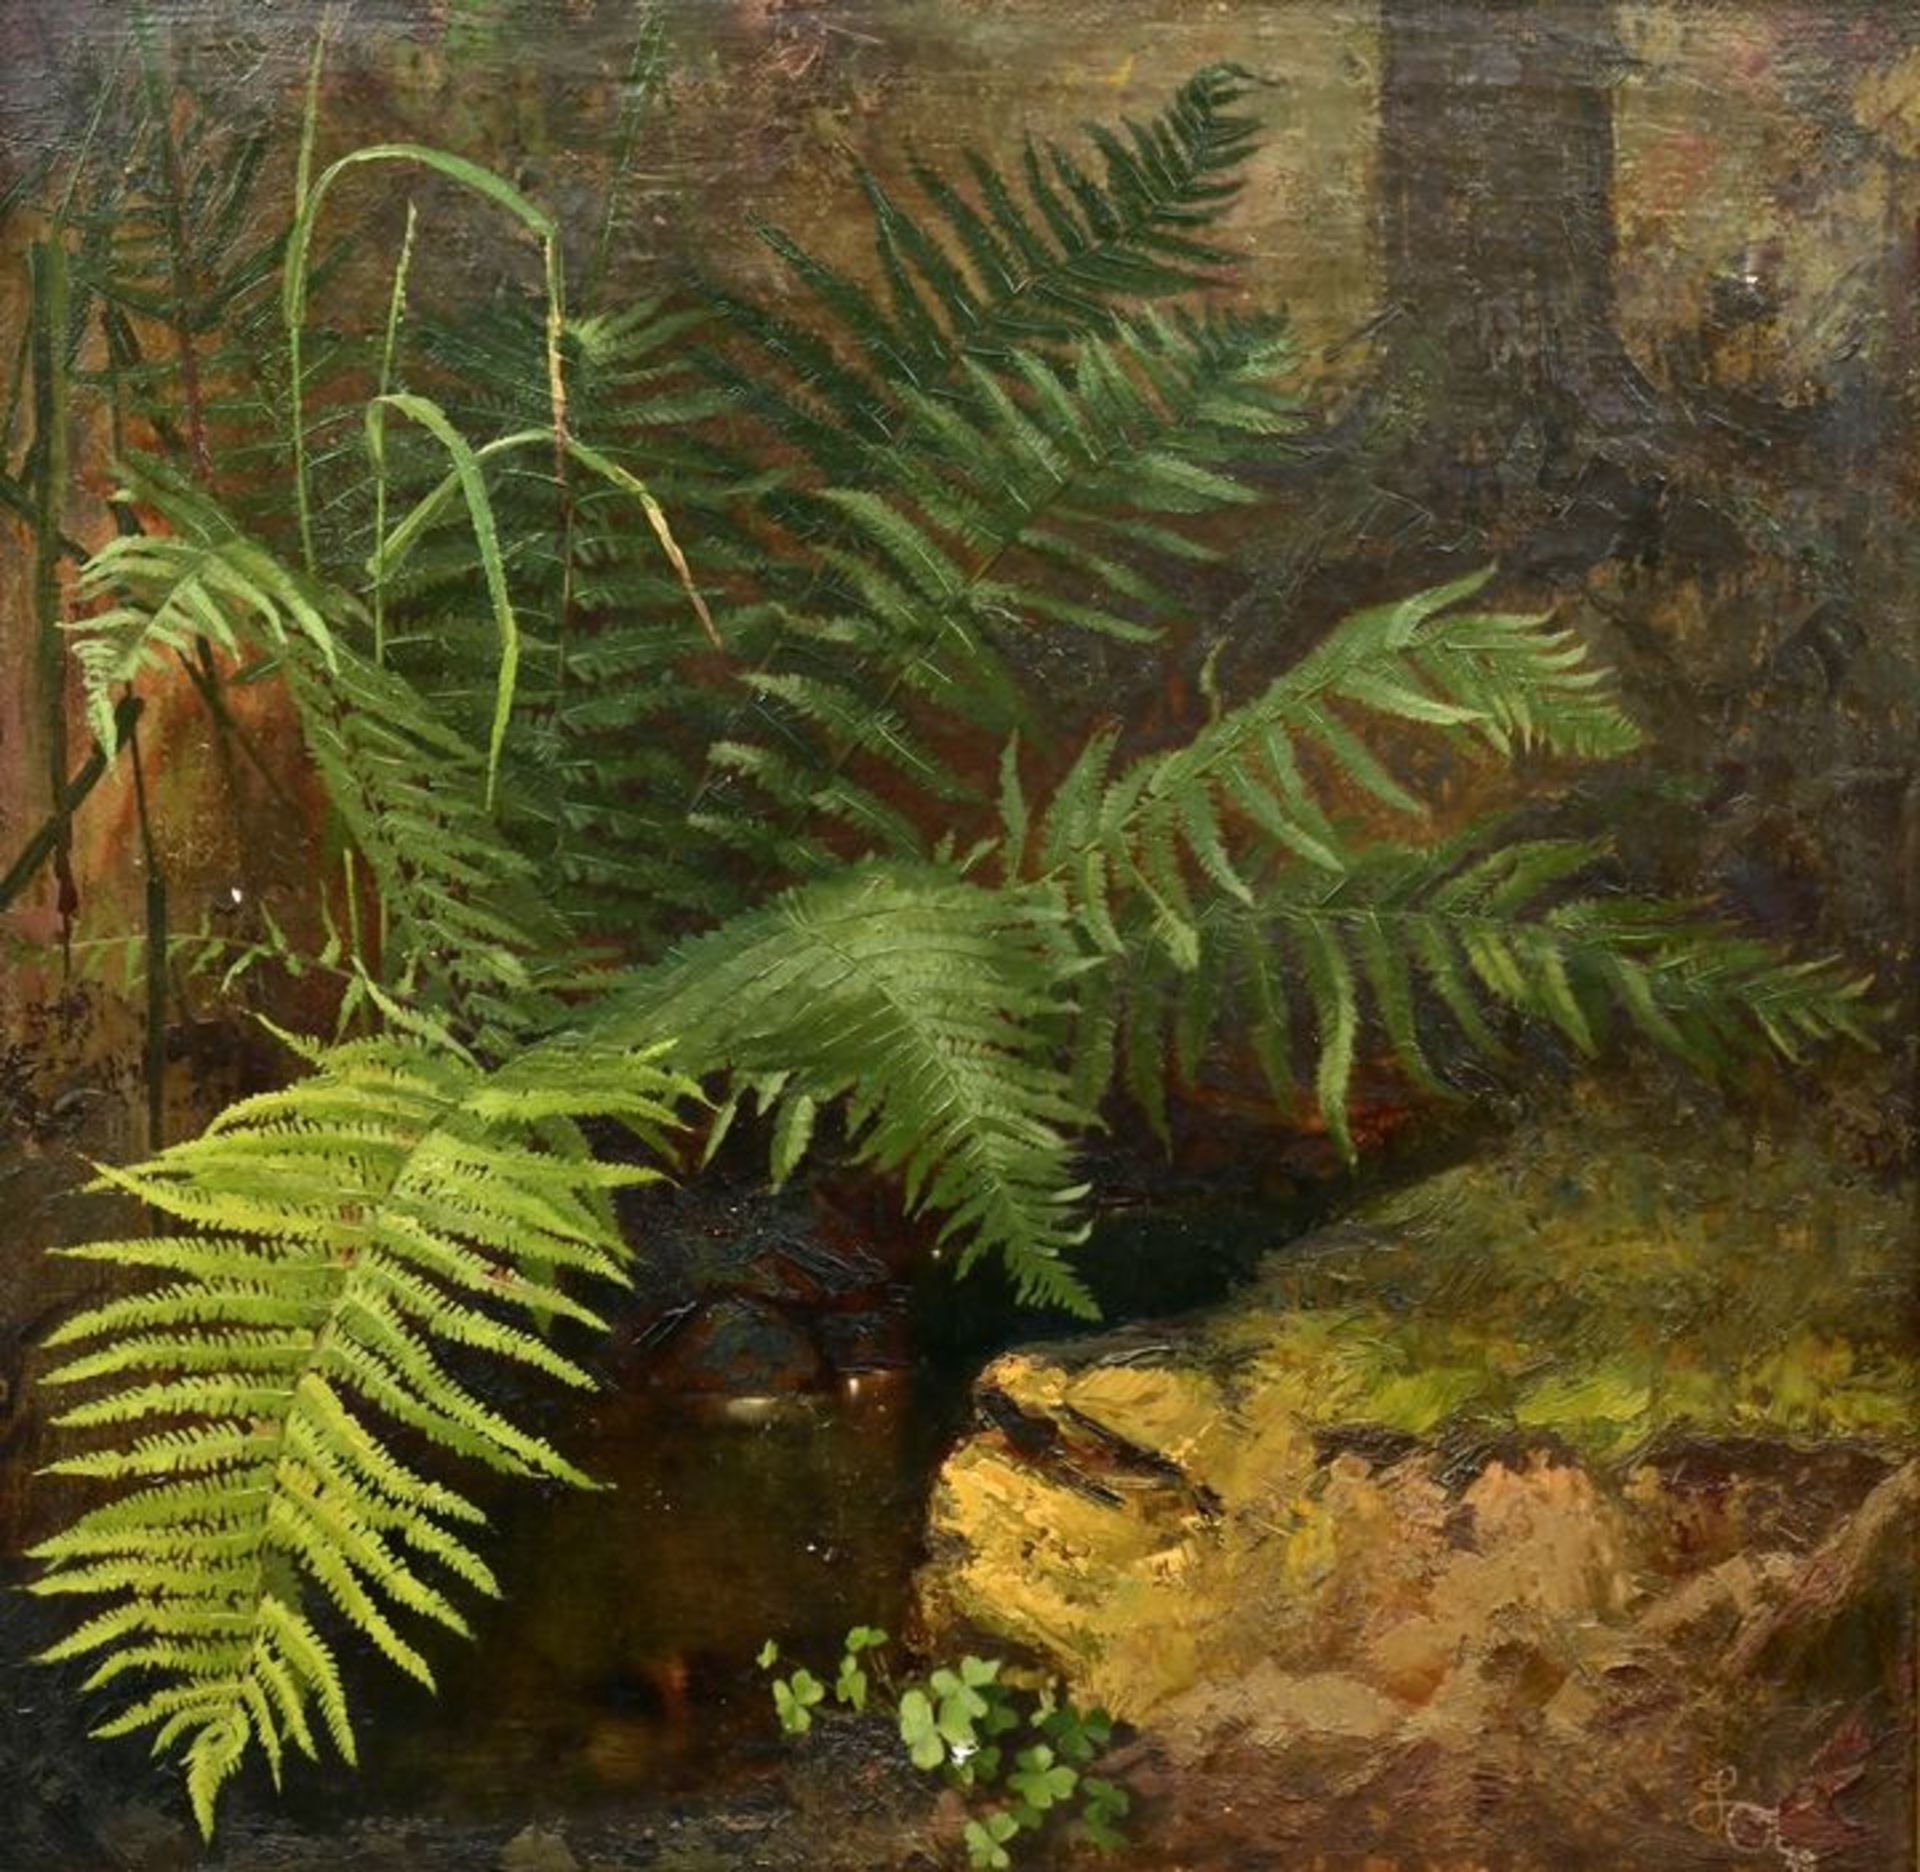 Aschmann, Gemälde / Fern plant at a creek, painting